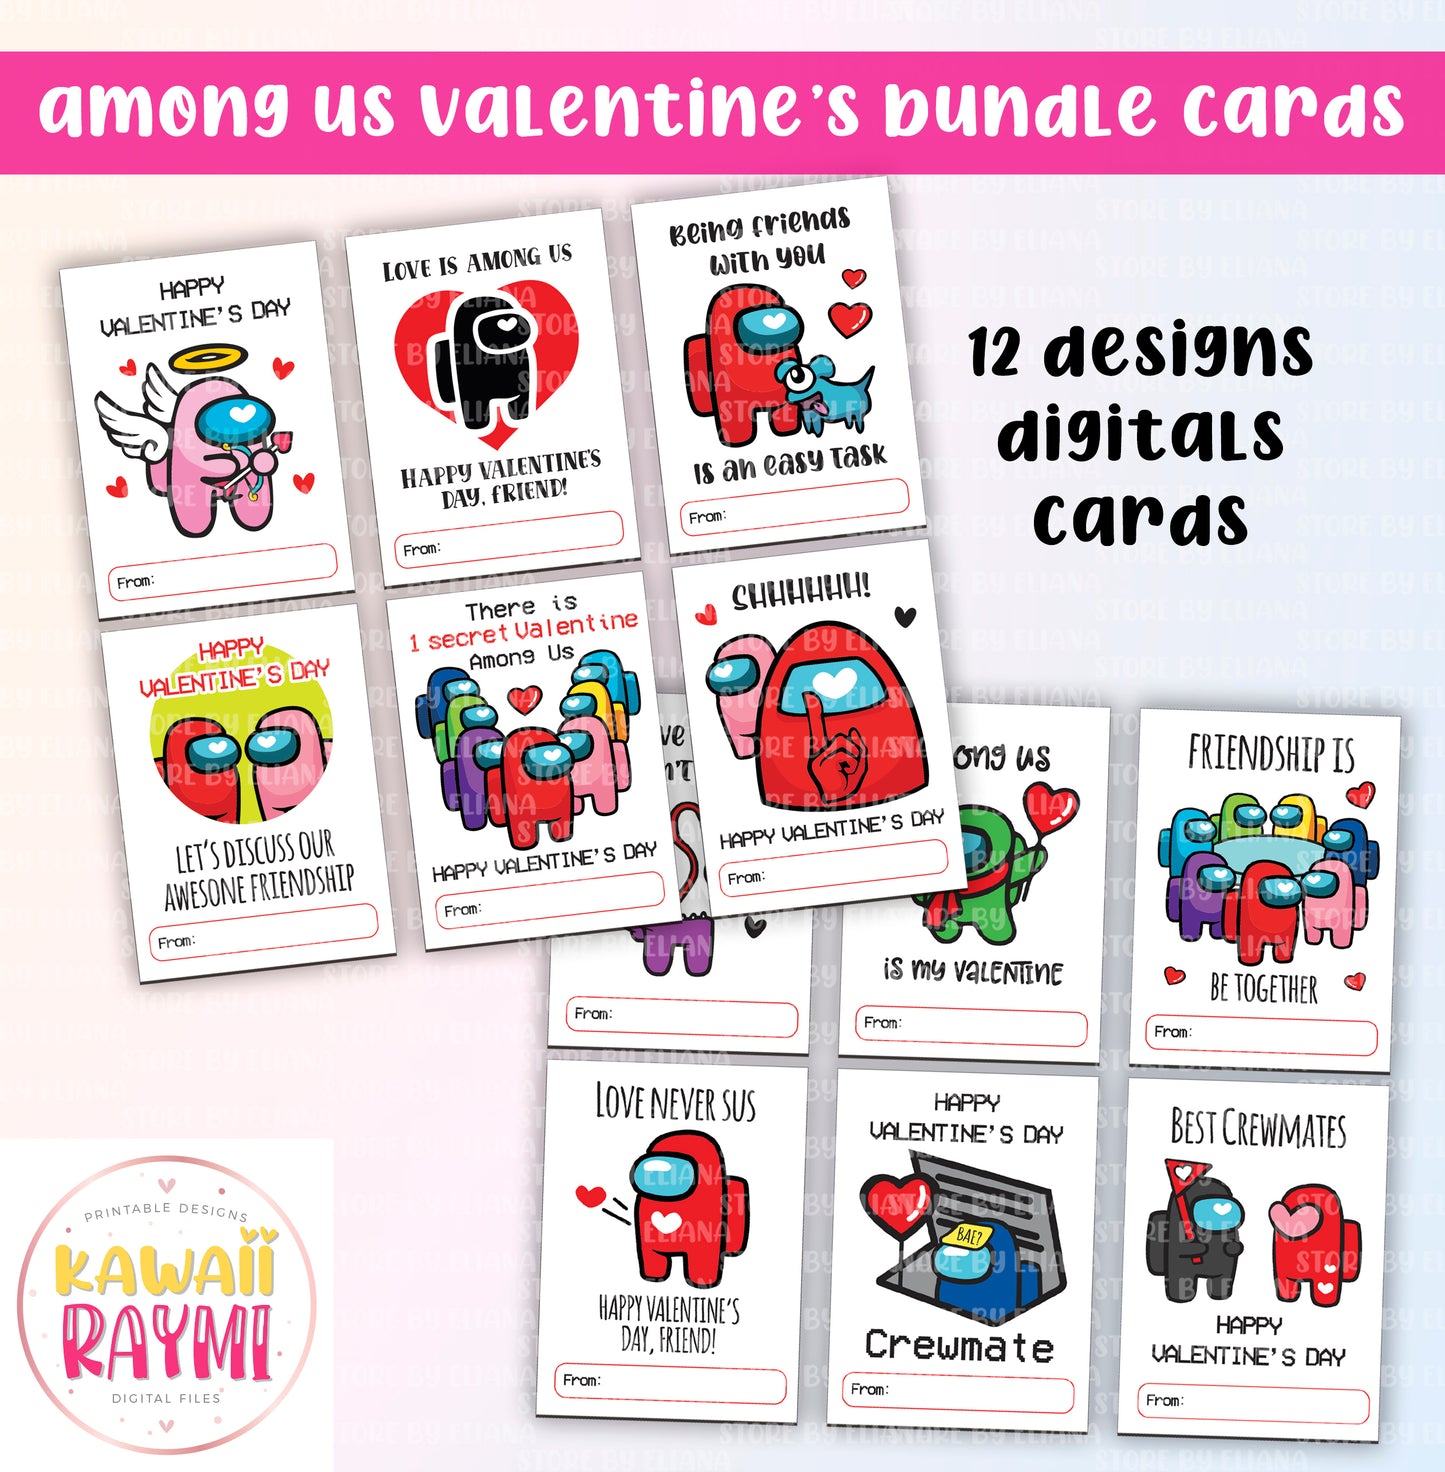 Among Us kids valentine's cards printable, among us bundle cards, valentine's day